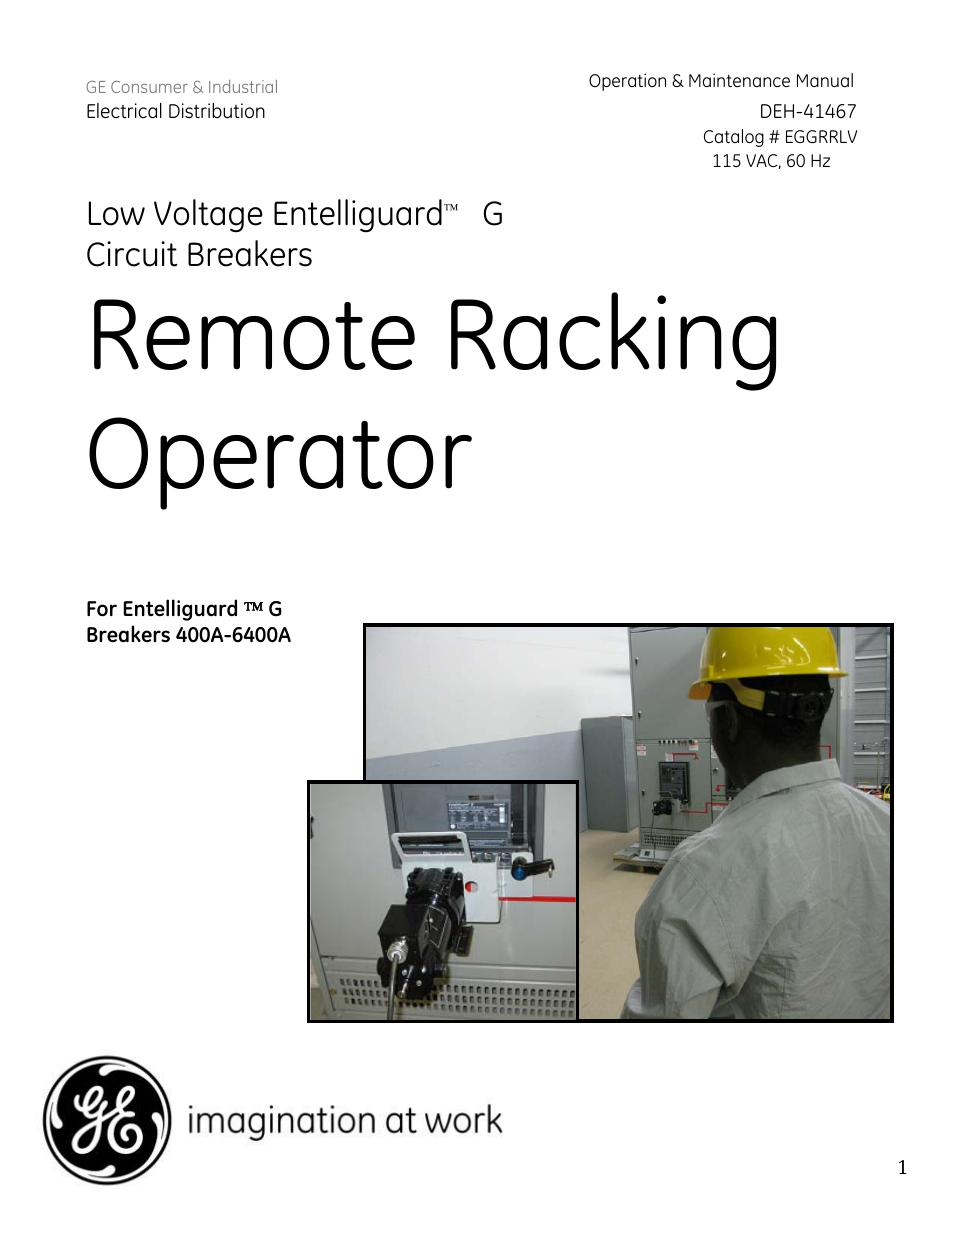 Remote Racking Operator: Low Voltage EntelliGuard G Circuit Breakers